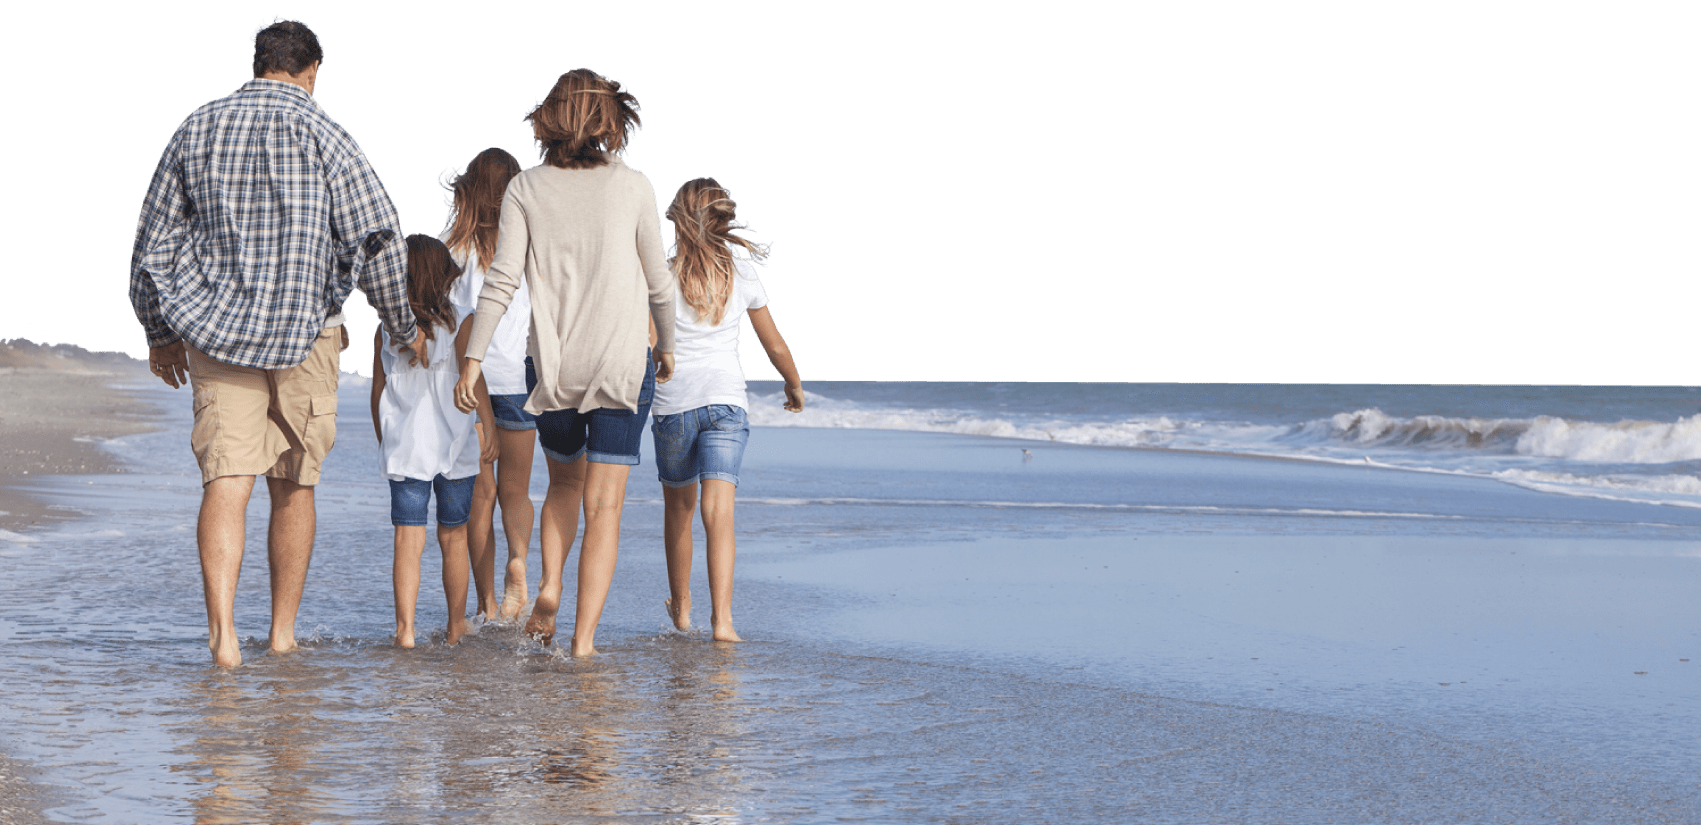 full width image of family walking on the beach